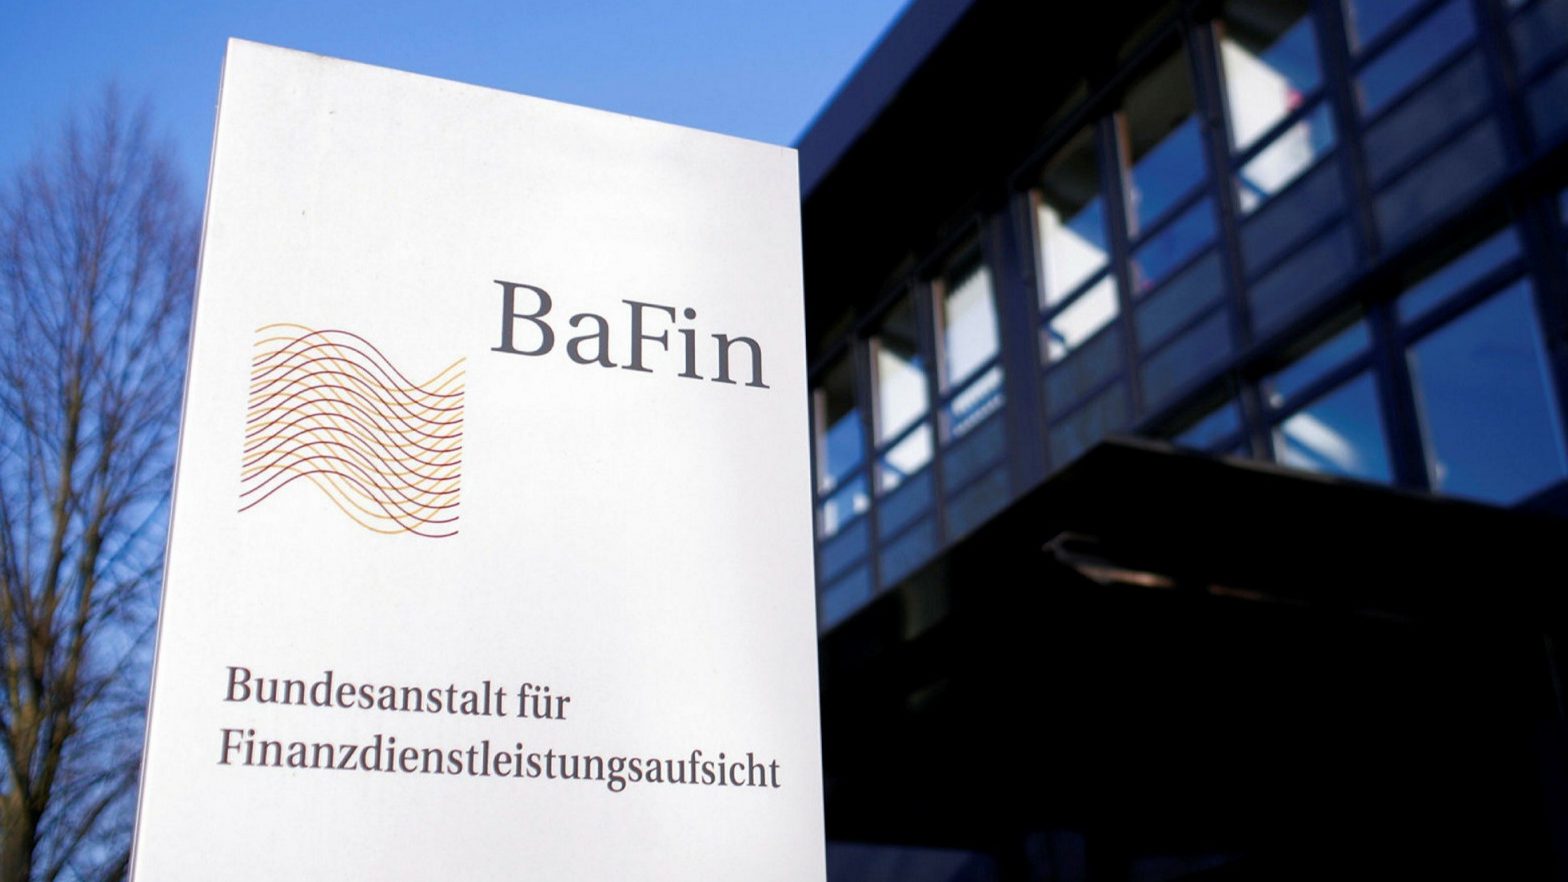 BaFin员工因涉嫌有线卡内幕买卖而被停职